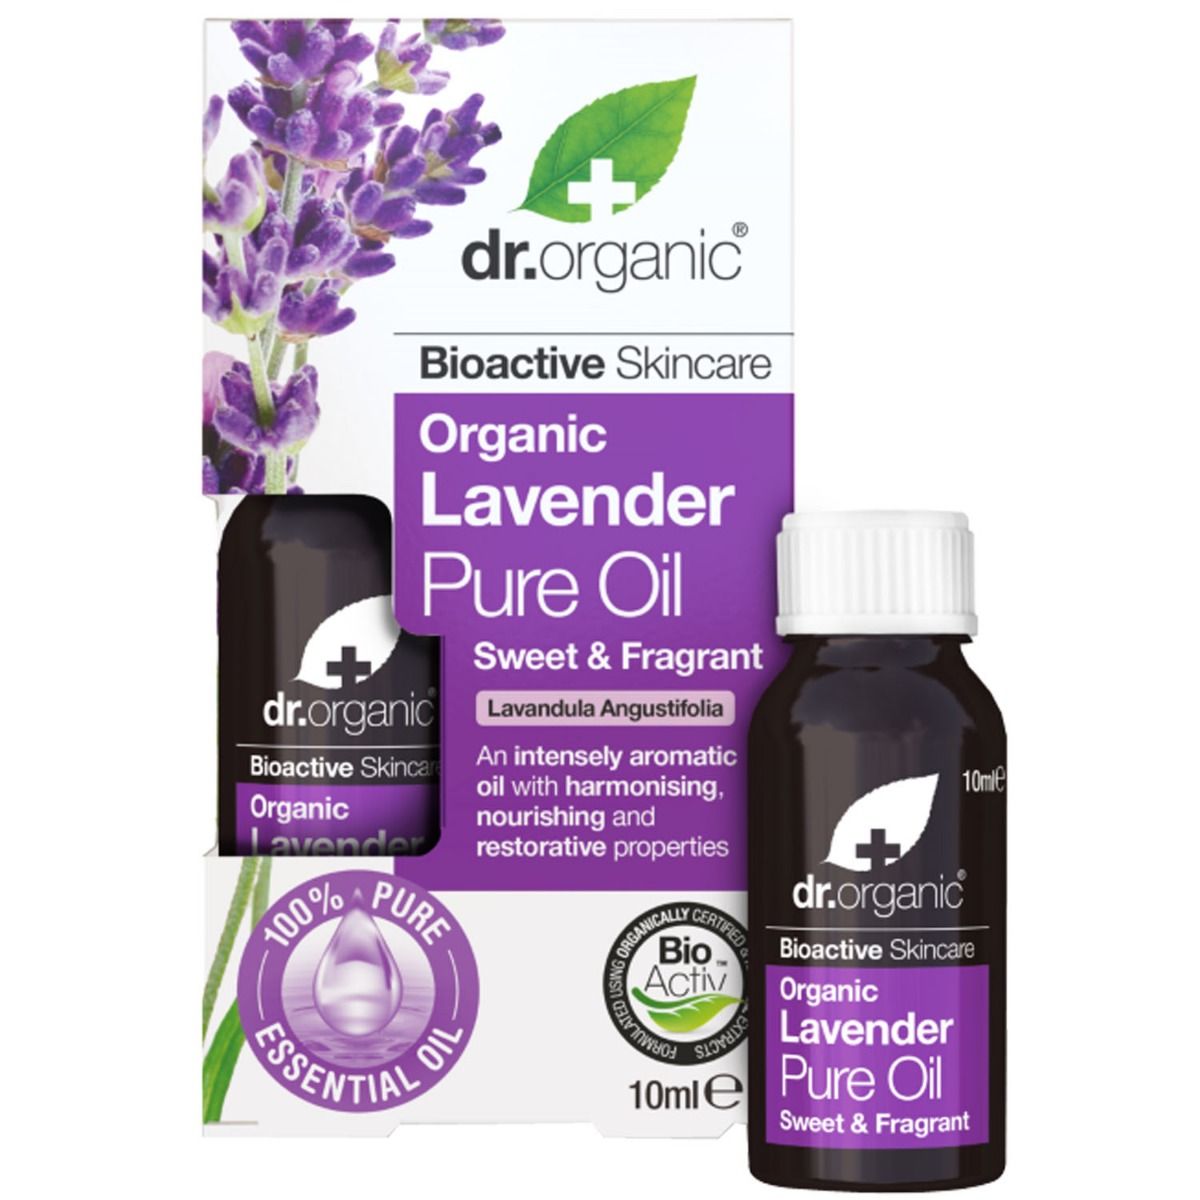 Buy dr.organic Lavender Pure Oil, 10 ml Online